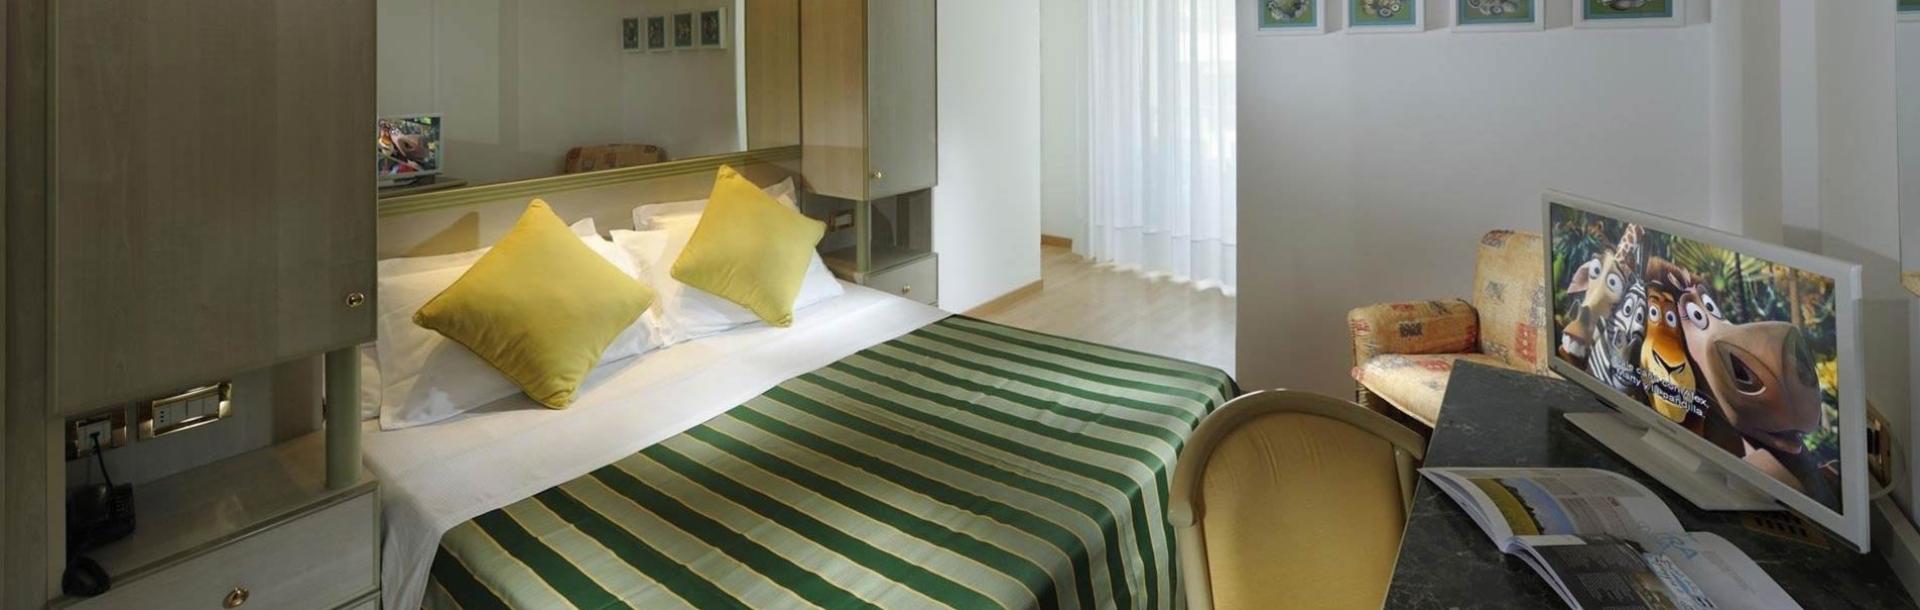 hotel-montecarlo hu egybenyilo-csaladi-szoba 012